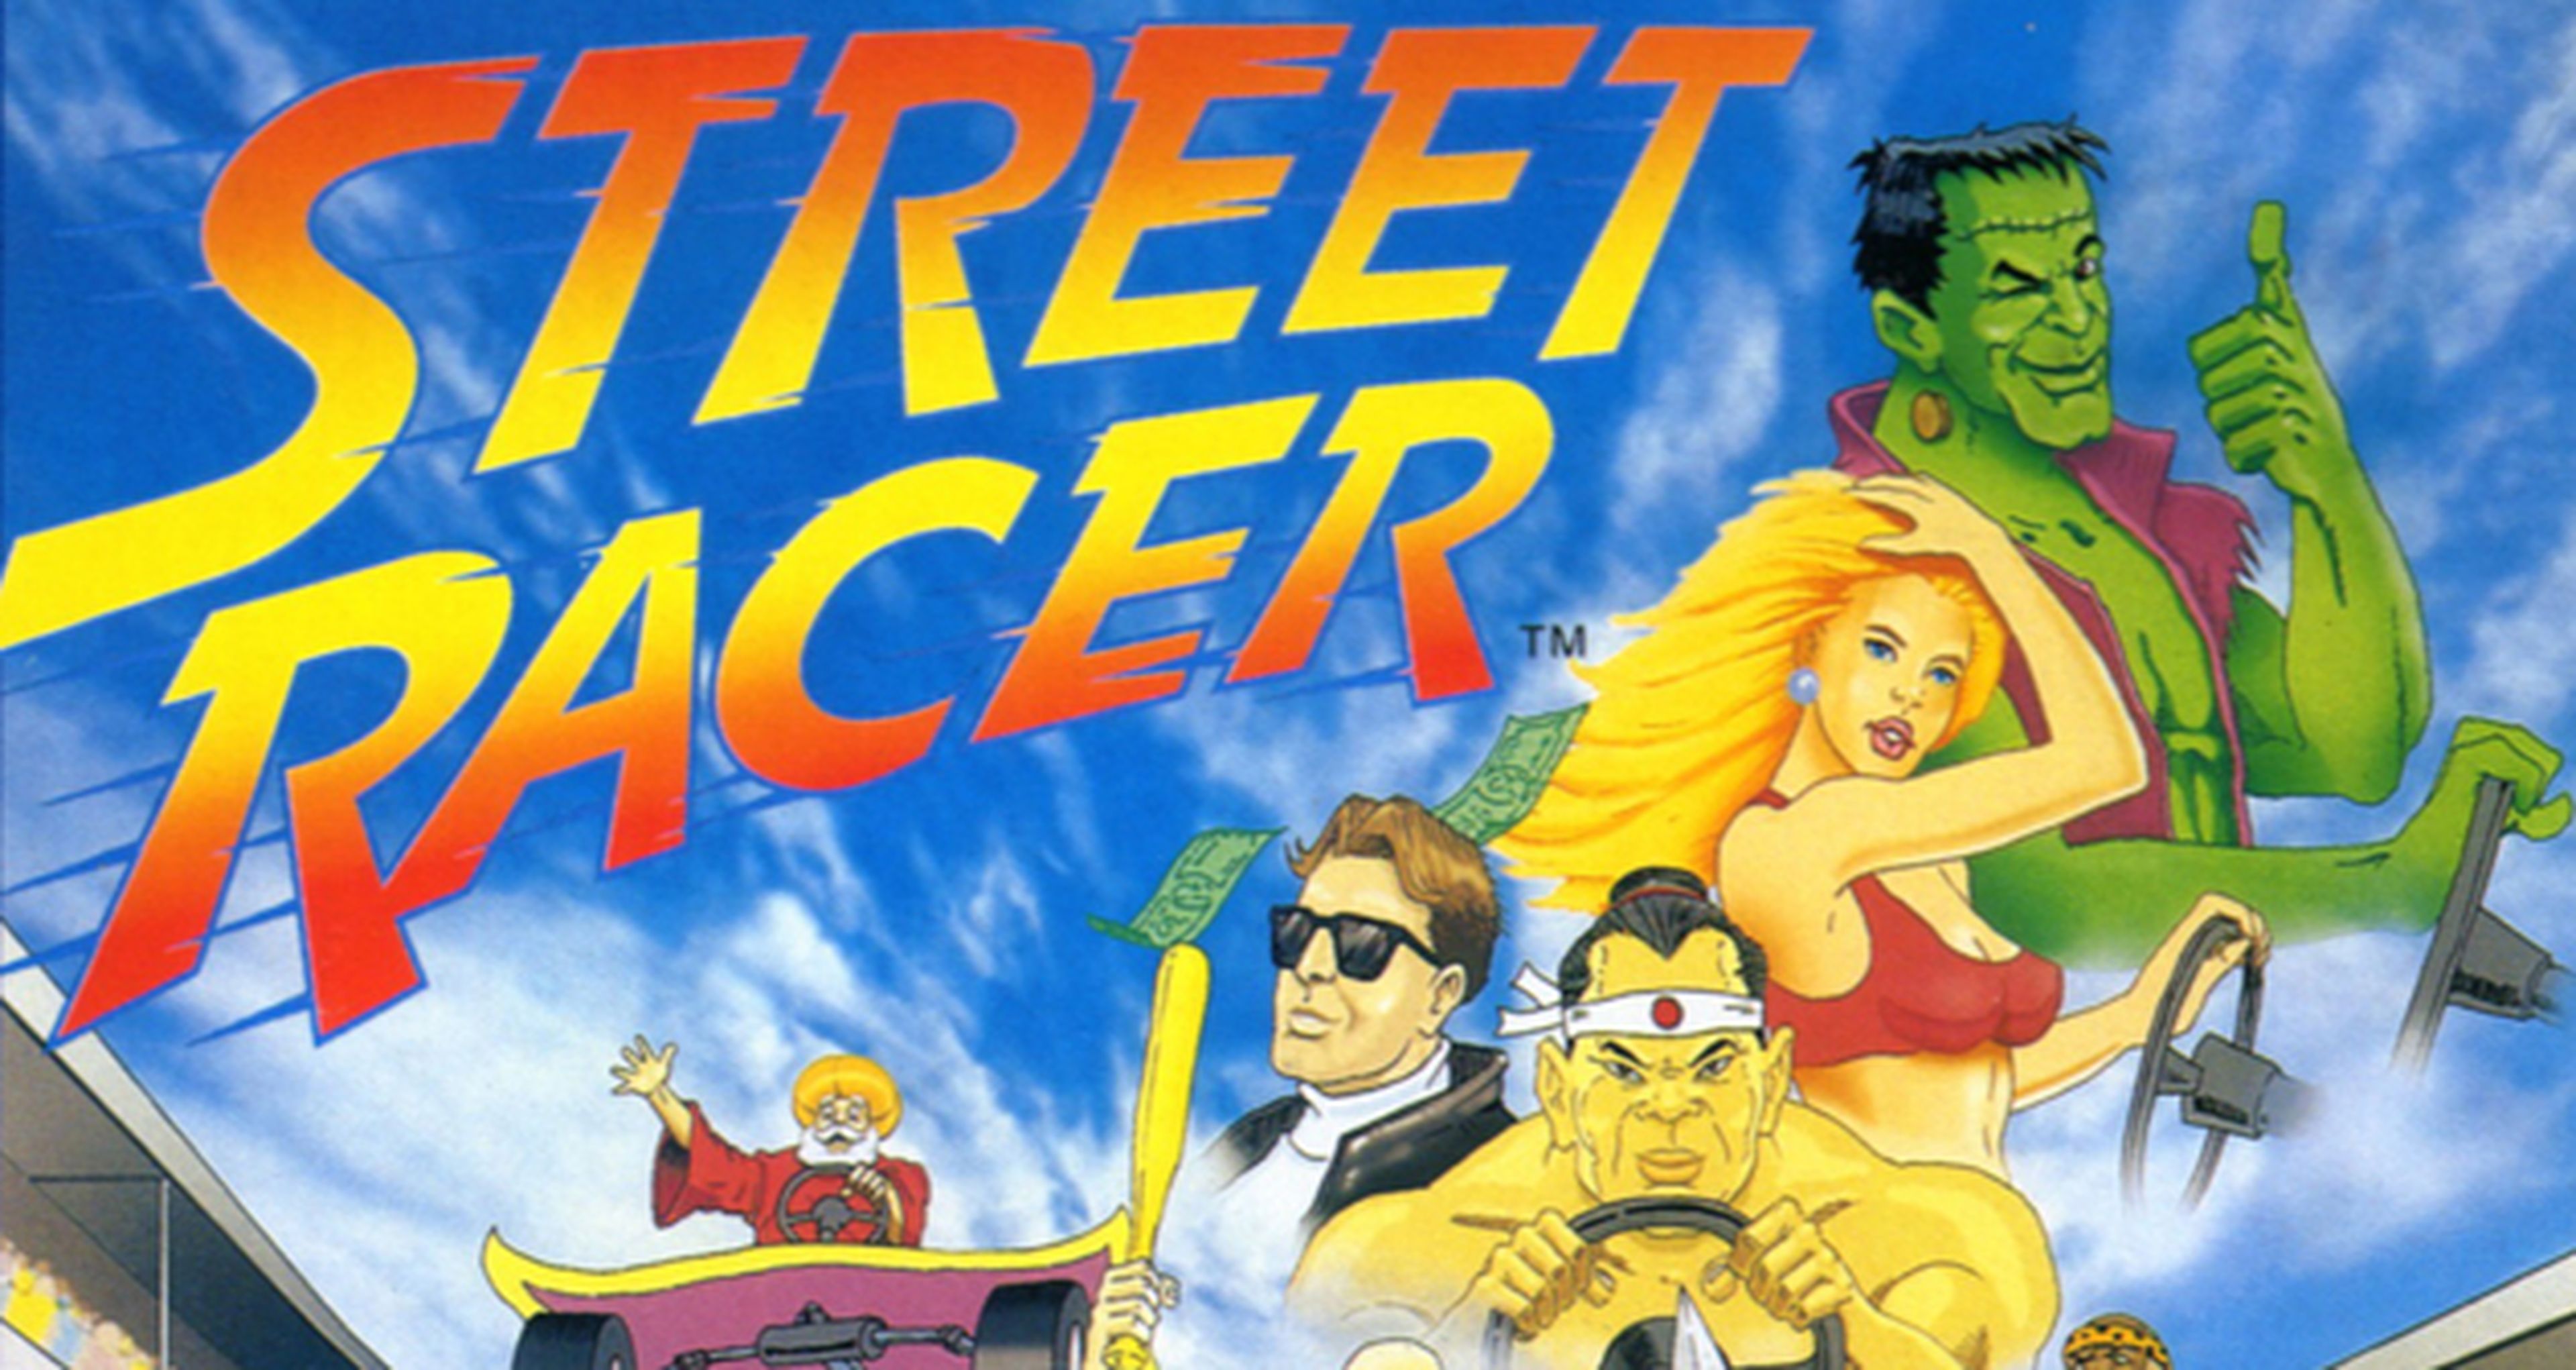 Hobby Consolas, hace 20 años: Street Racer